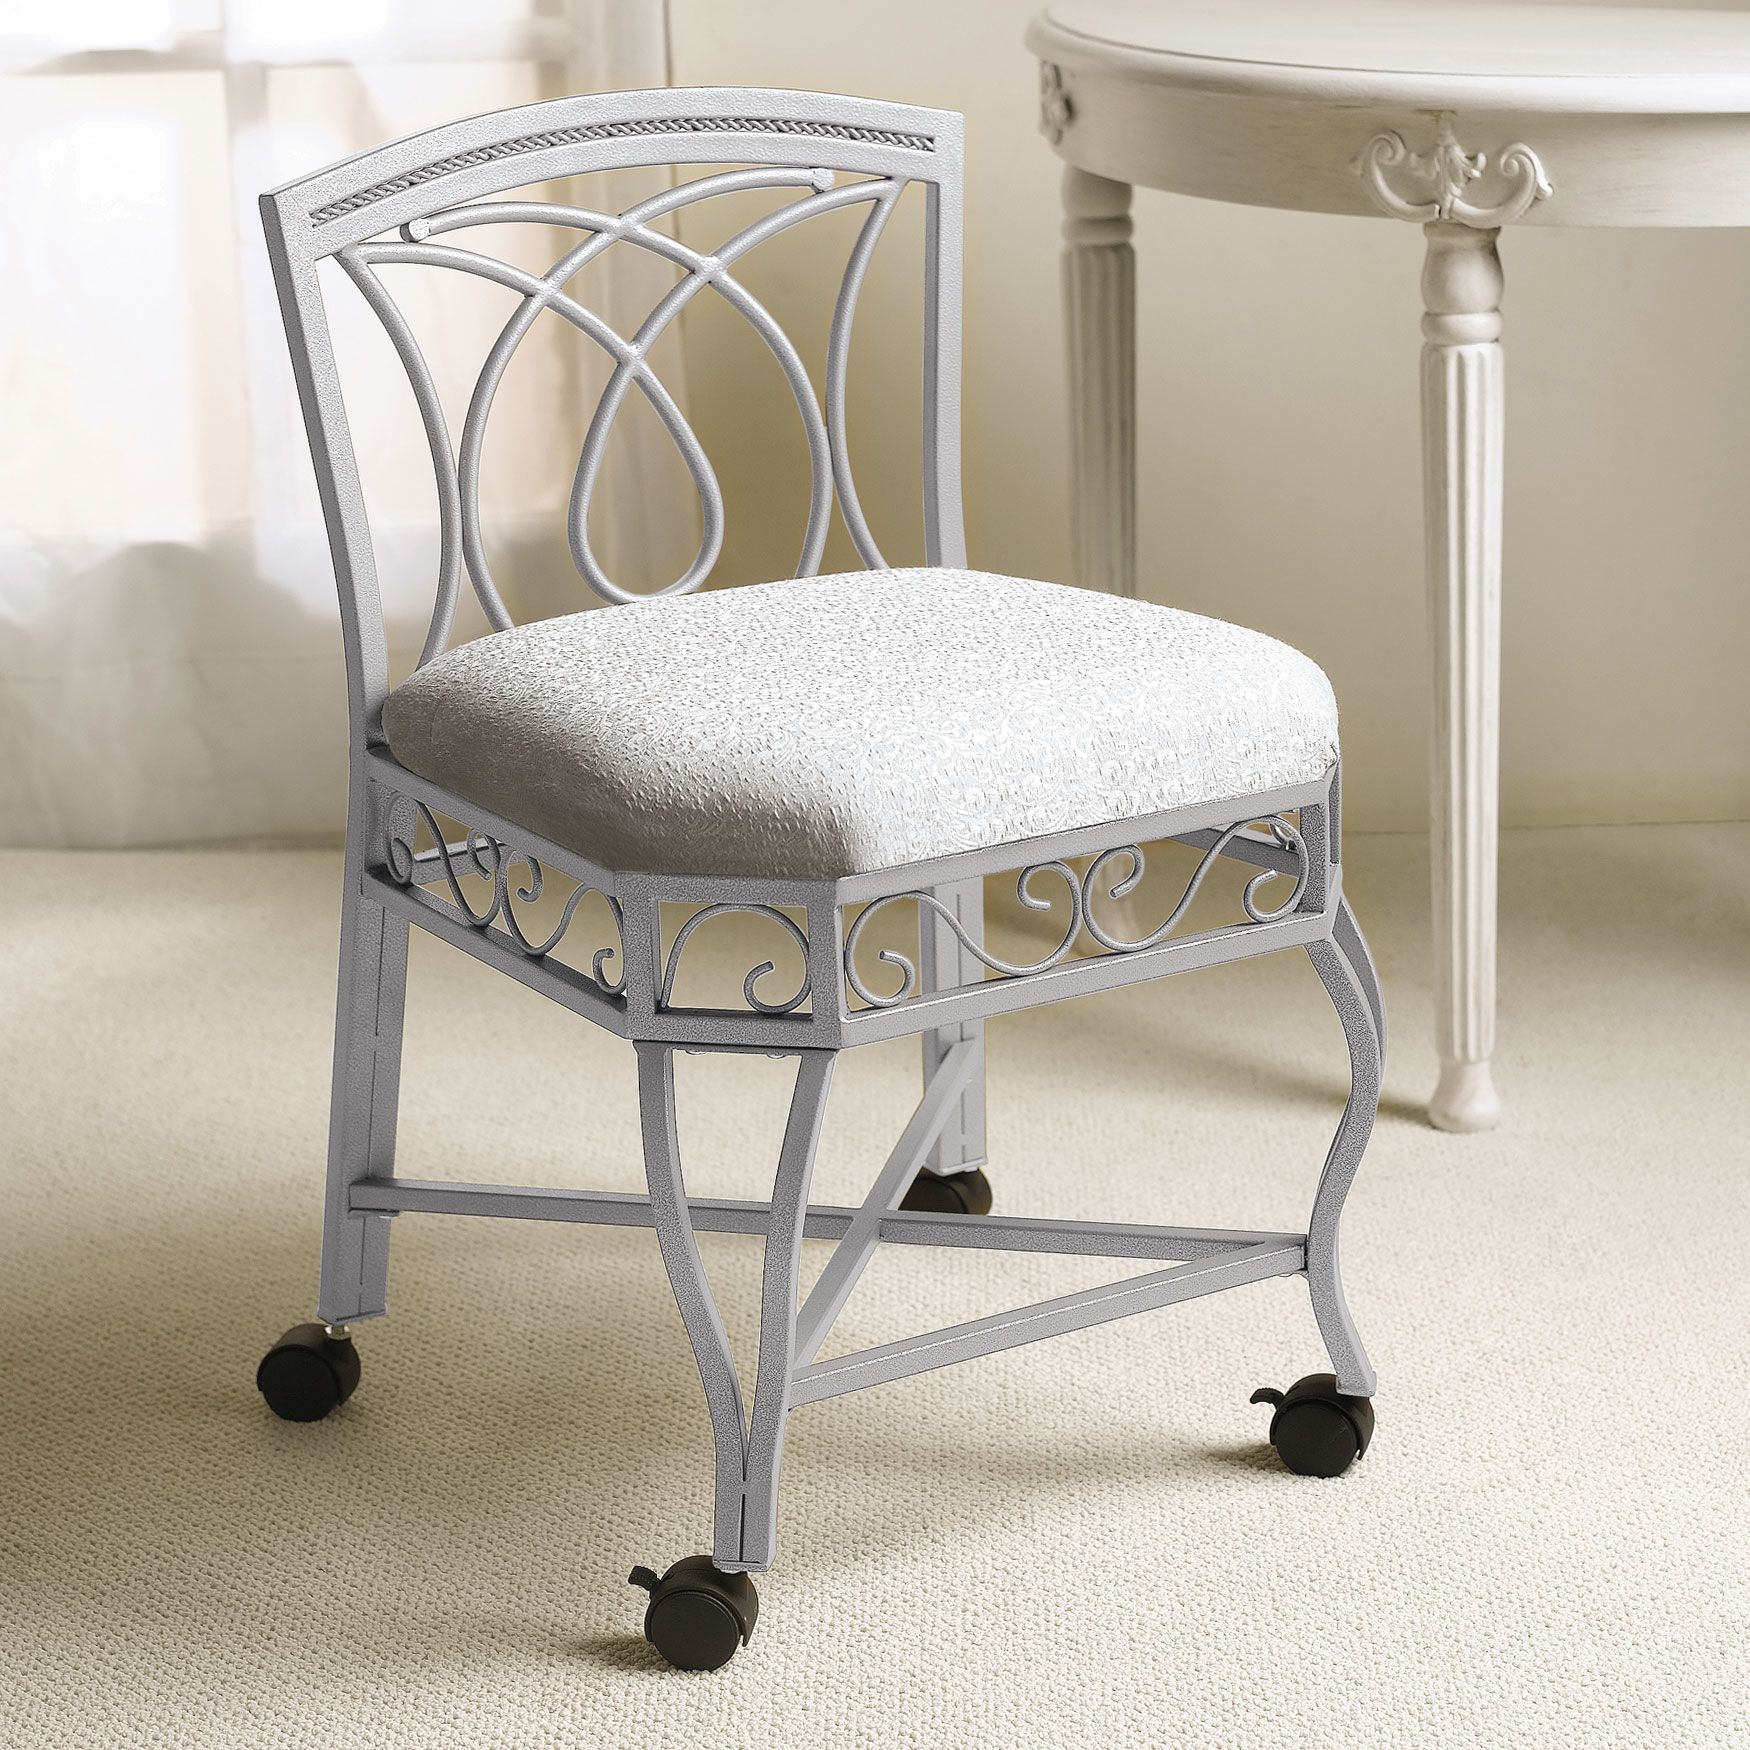 Vanity Chair With Wheels Visualhunt, Bed Bath And Beyond Vanity Stool